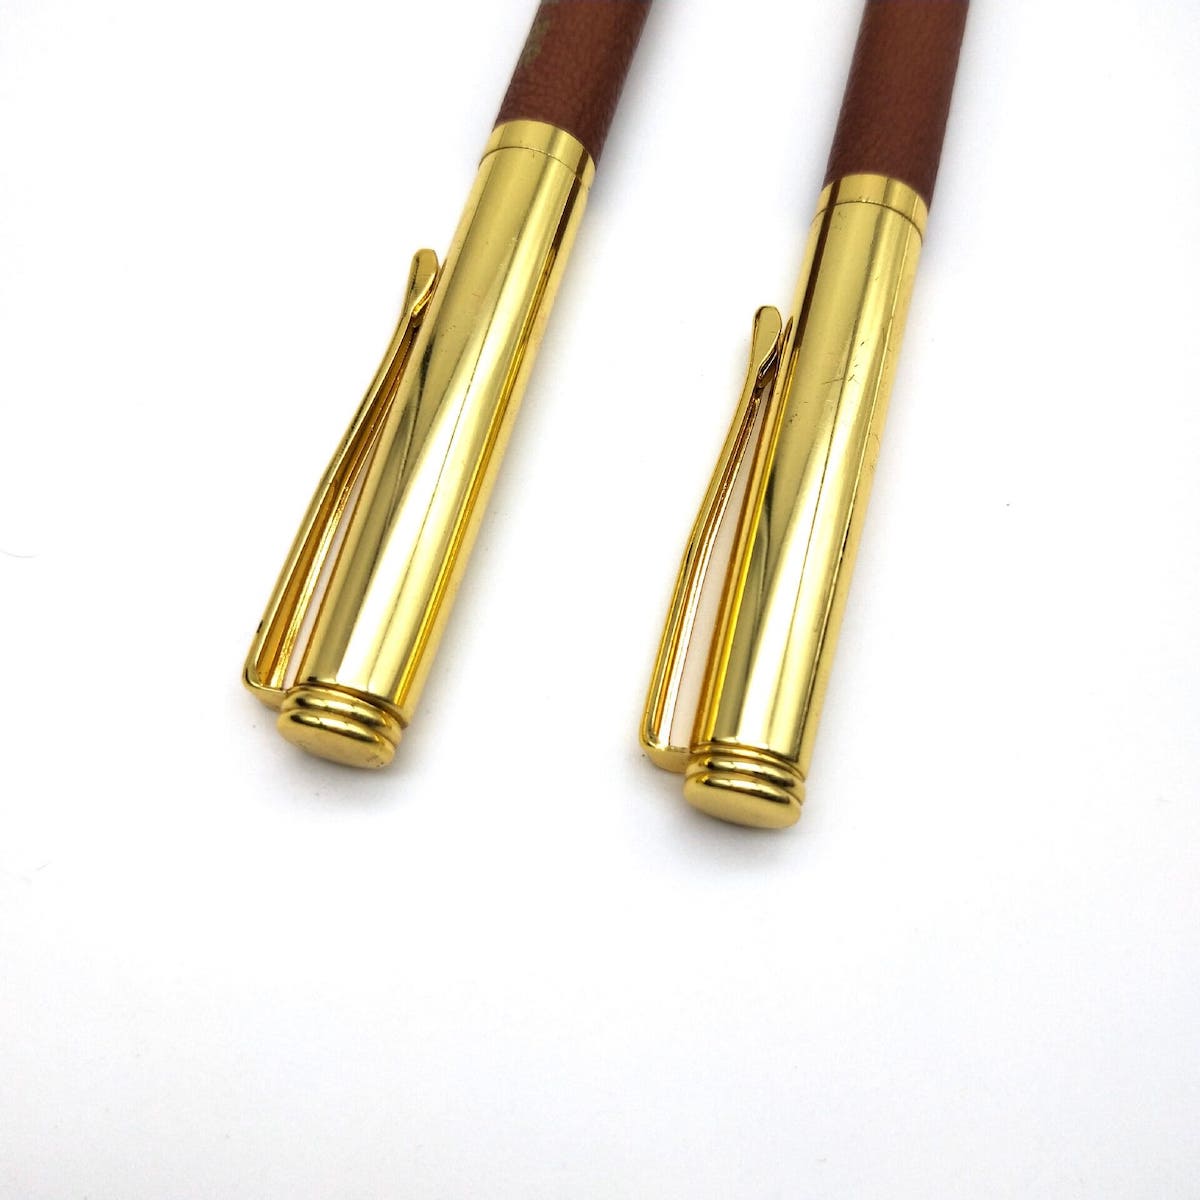 luxury golden ballpoint pen with leather